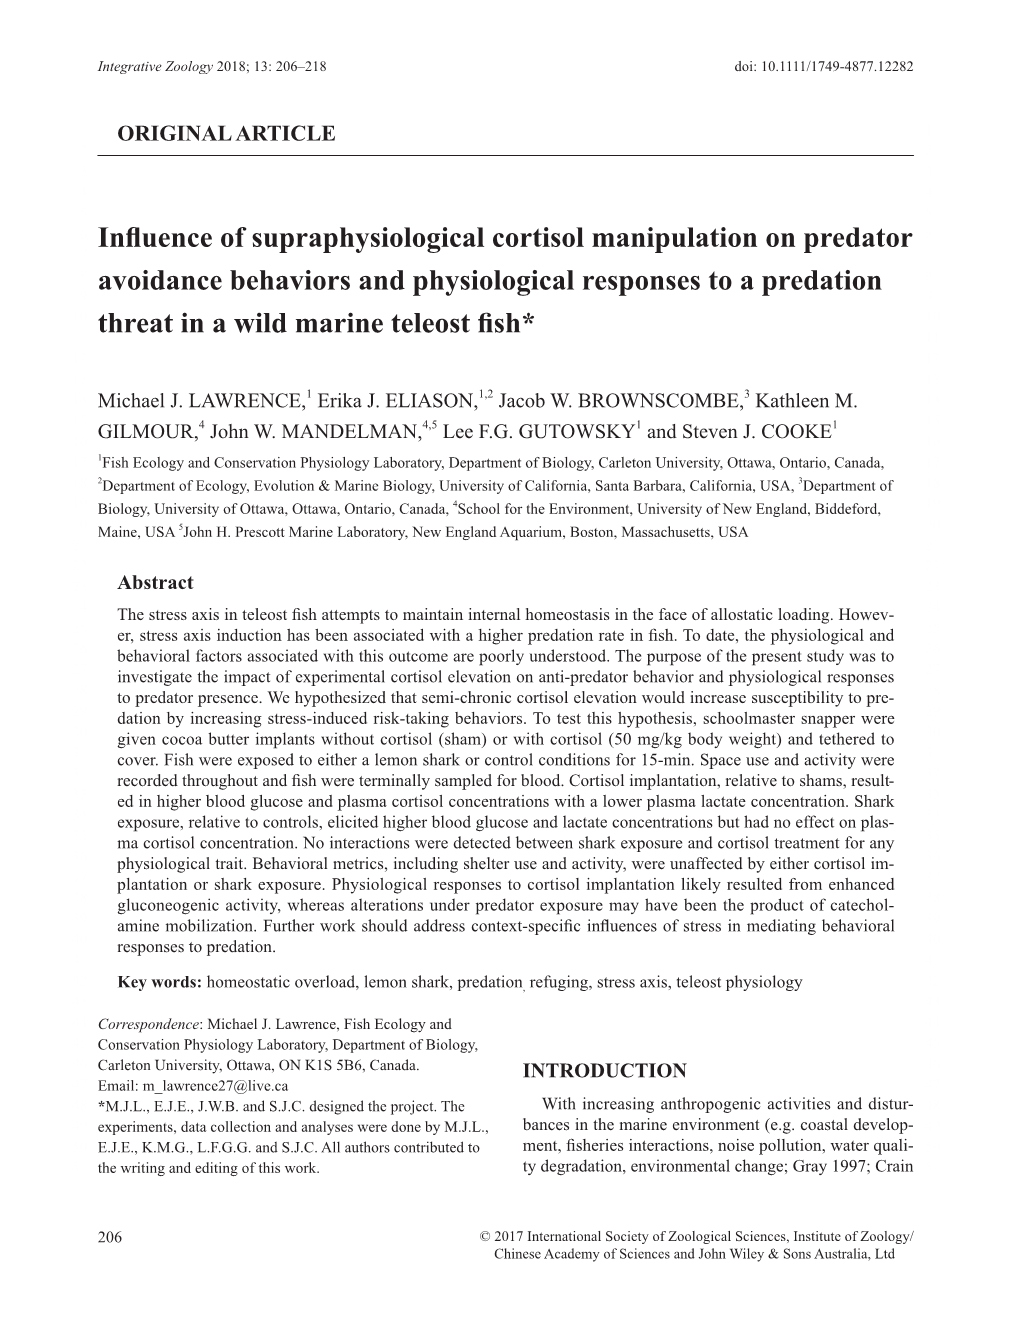 Influence of Supraphysiological Cortisol Manipulation on Predator